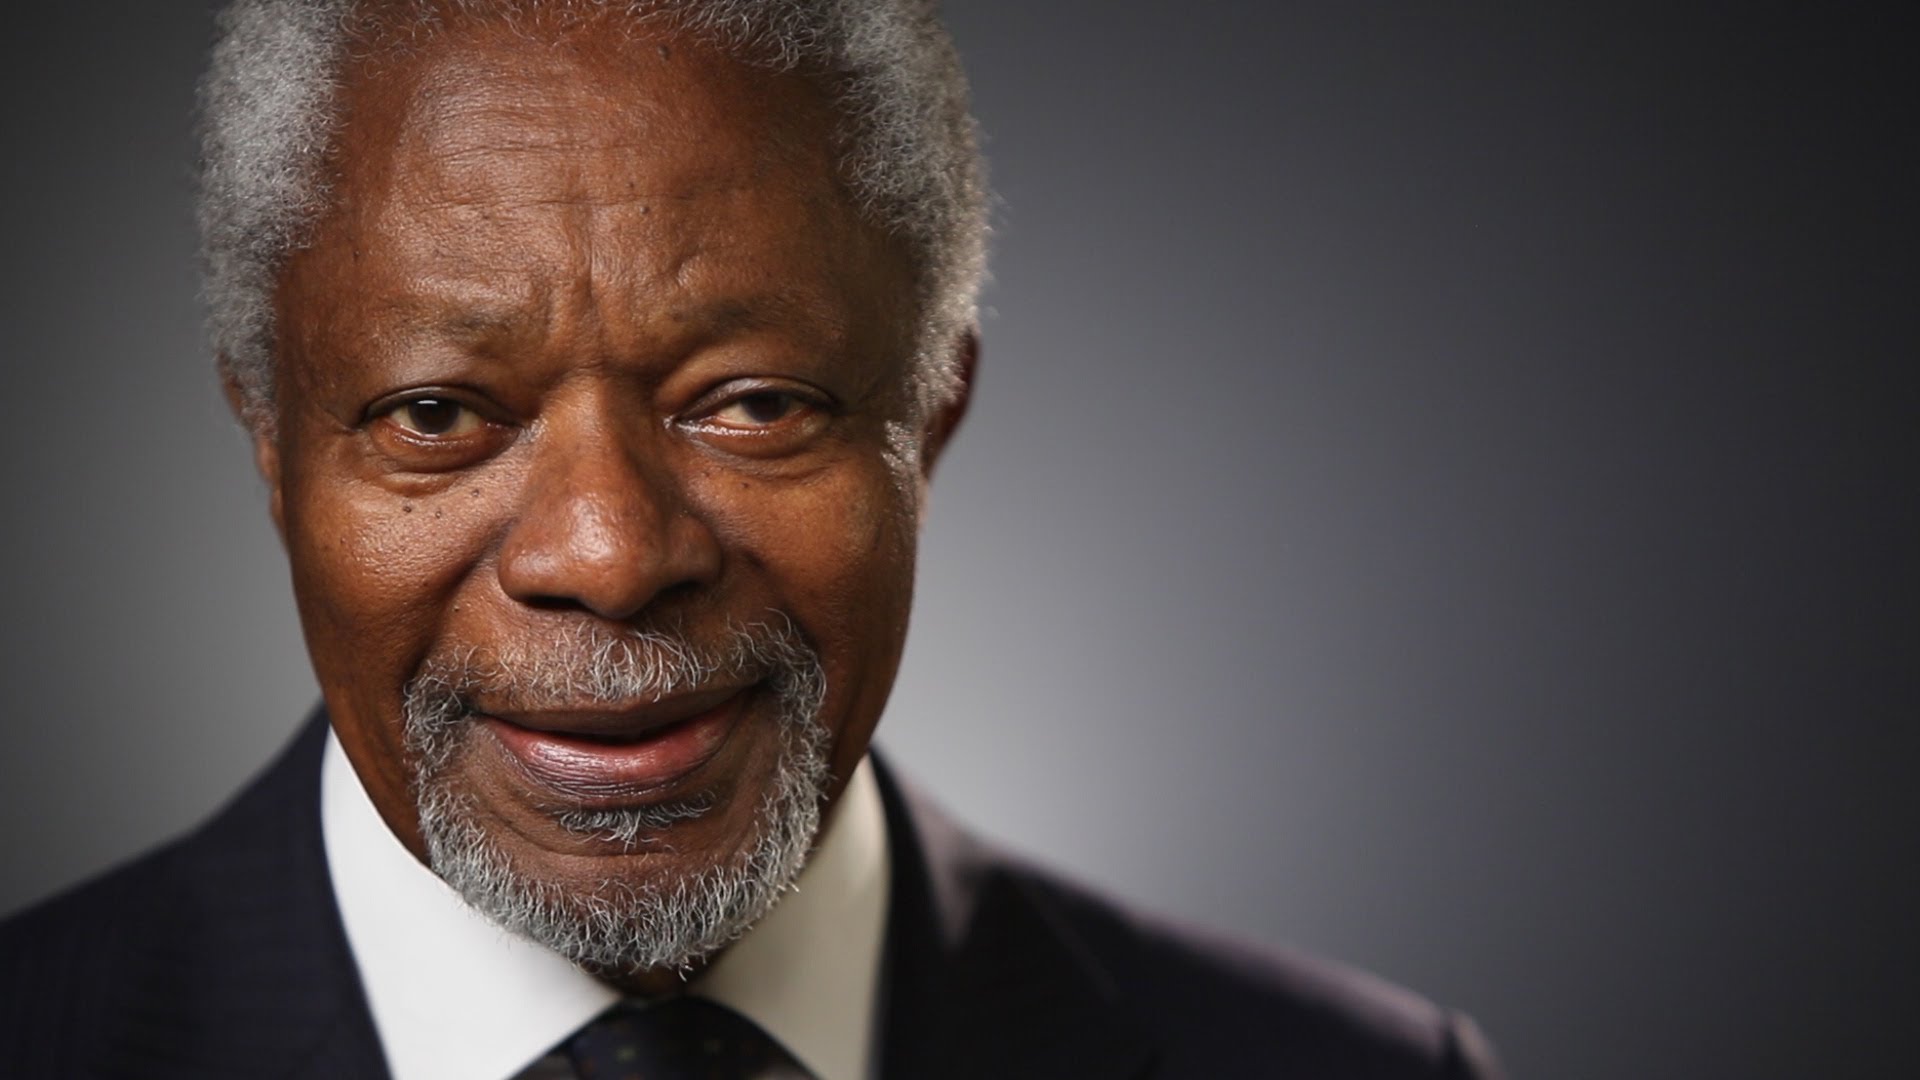 Eightieth birthday "Hard Talk": Kofi Annan and Legacy